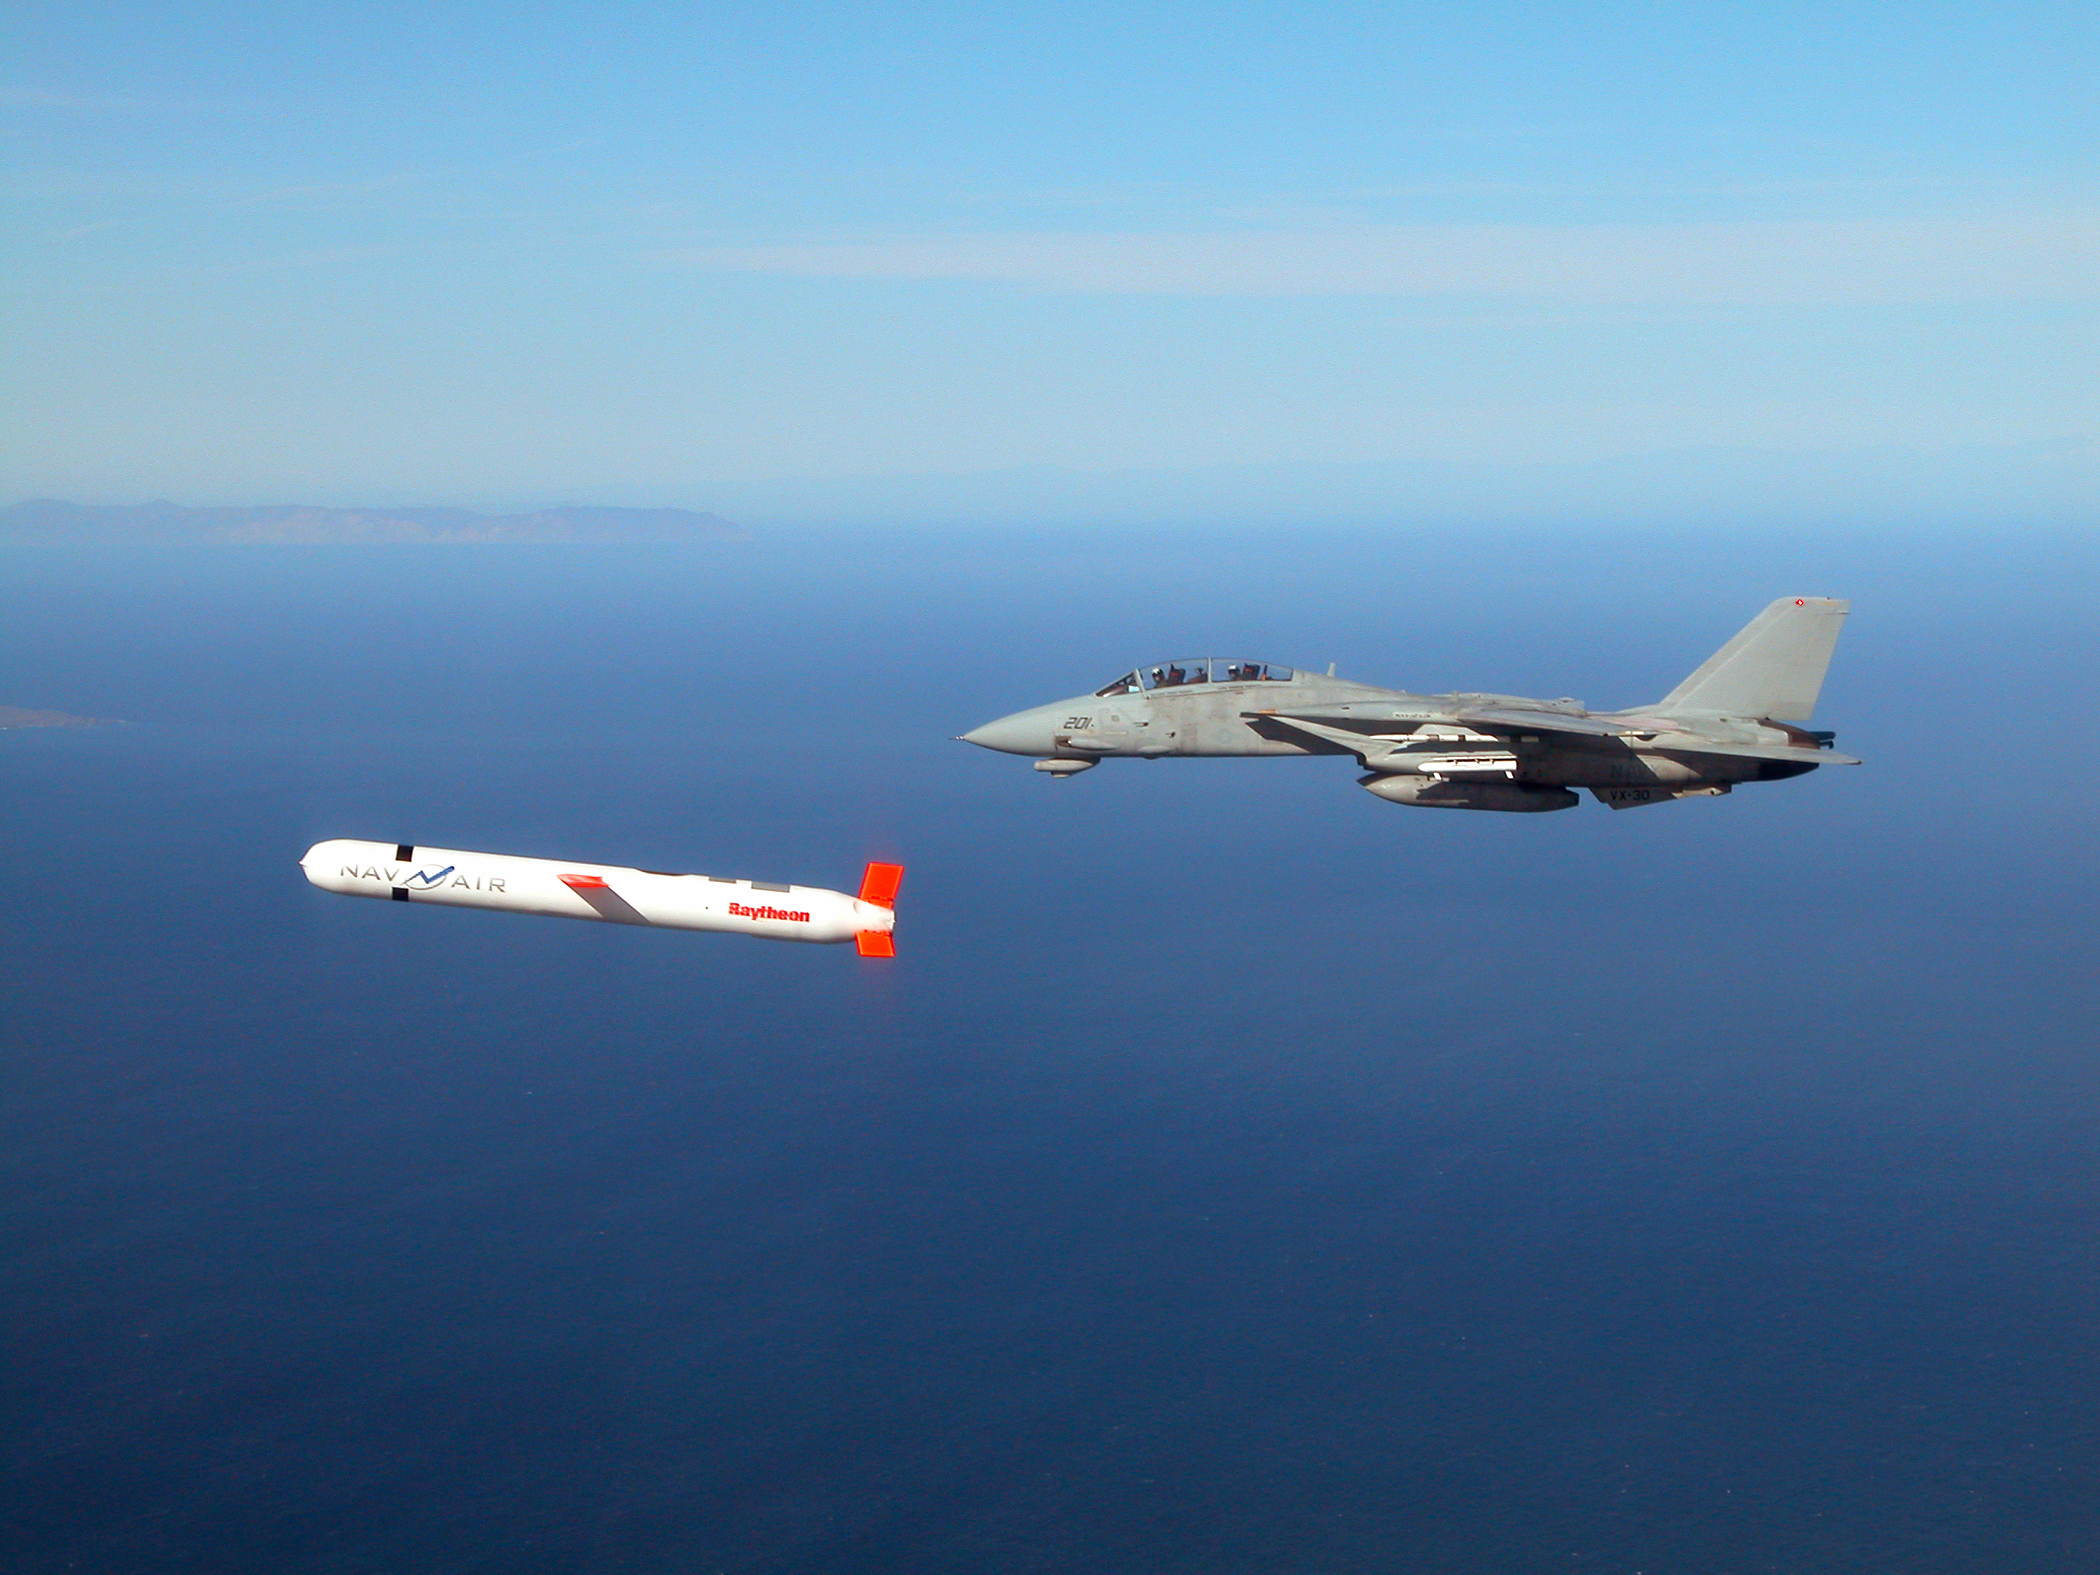 cruise missile vs tomahawk